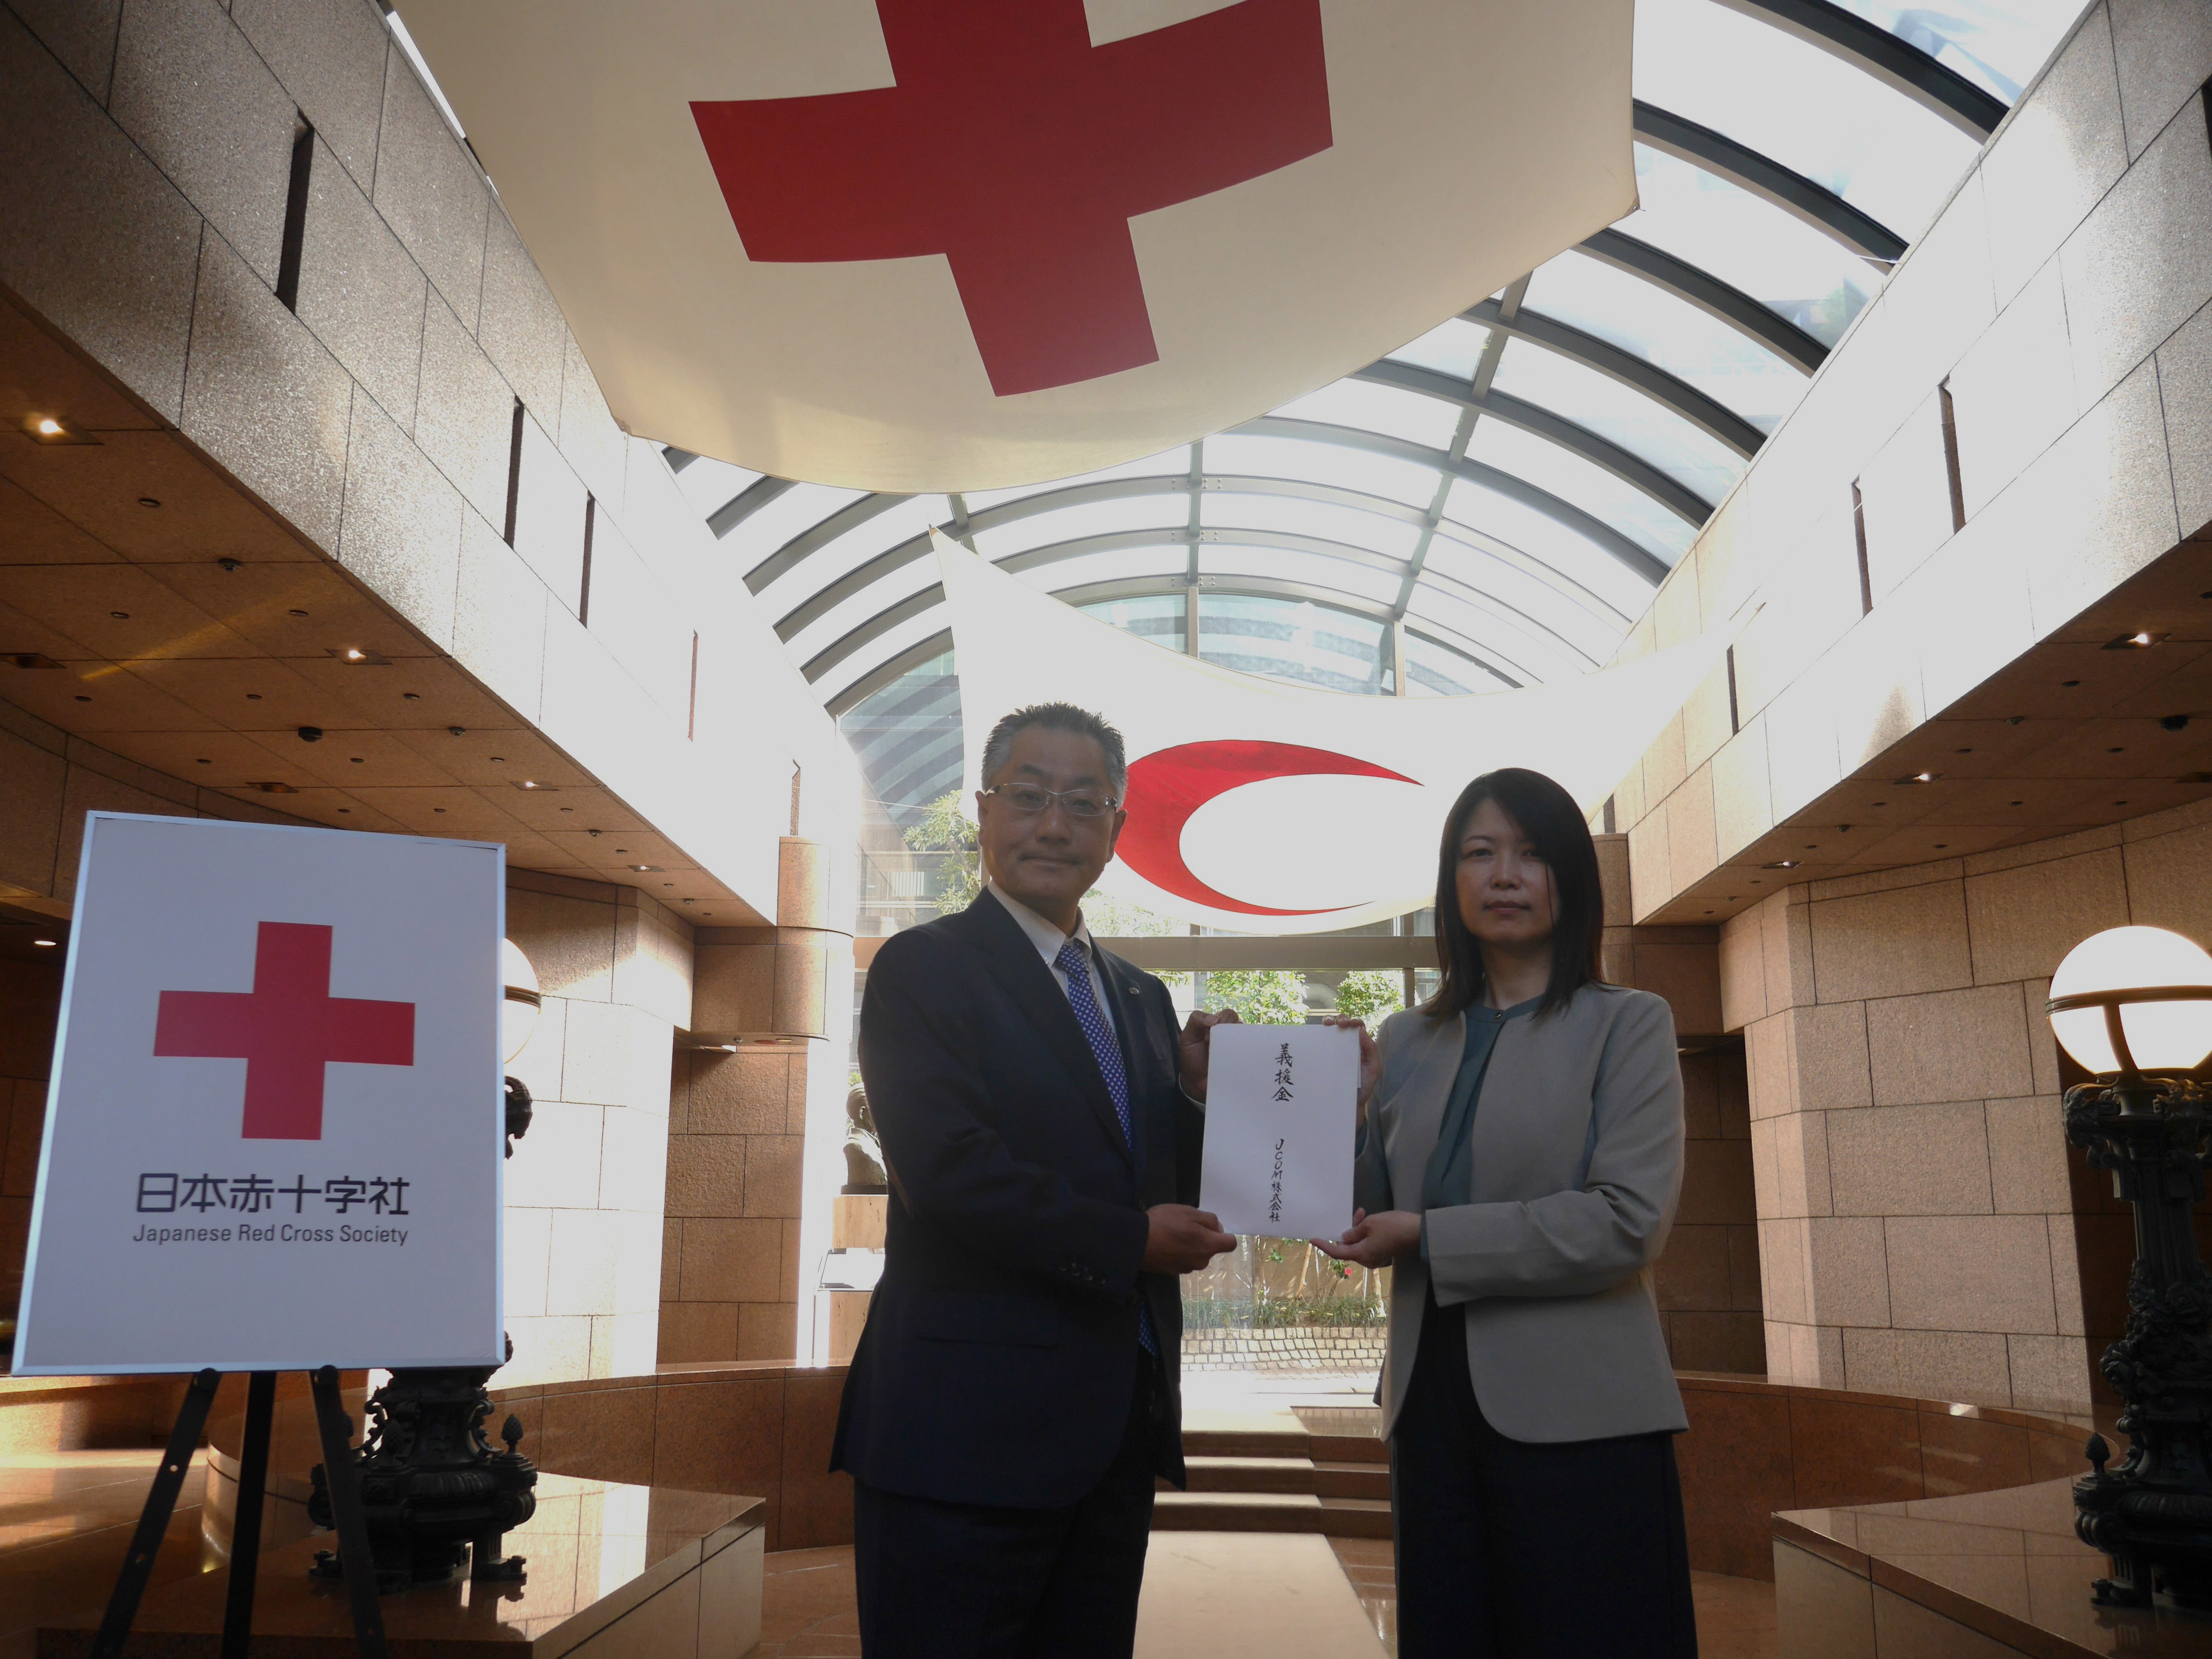 From left: Tatsuya Aizawa, Director of Partnership Promotion, Japanese Red Cross Society, Atsuko Suzuki, Director of J:COM Sustainability Management Promotion Office